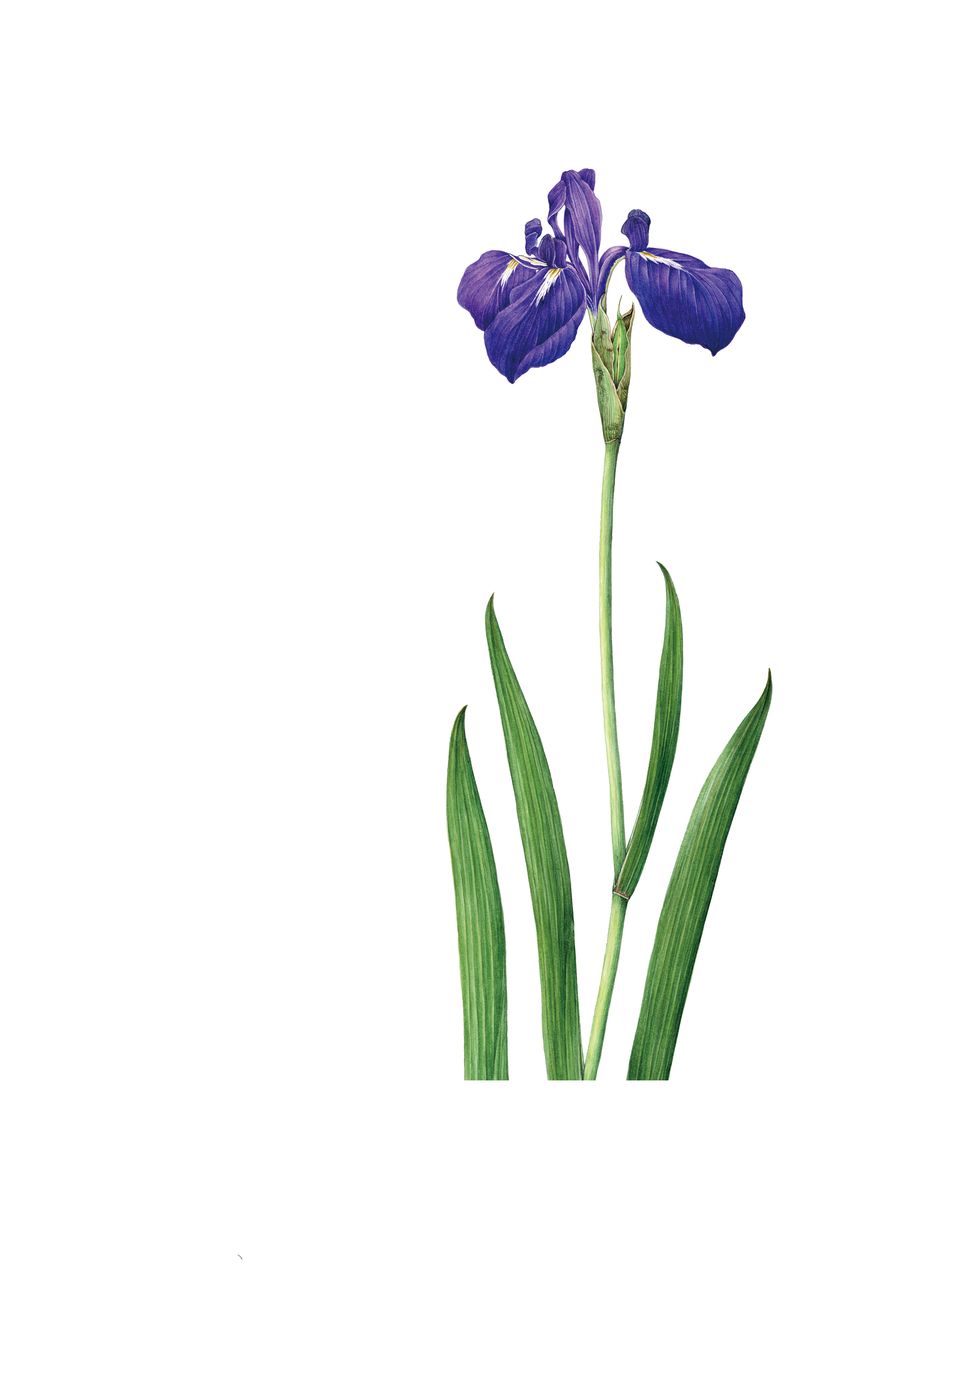 Flower, Flowering plant, Plant, Iris, Botany, Cut flowers, Orris root, Iris family, Petal, Pedicel, 